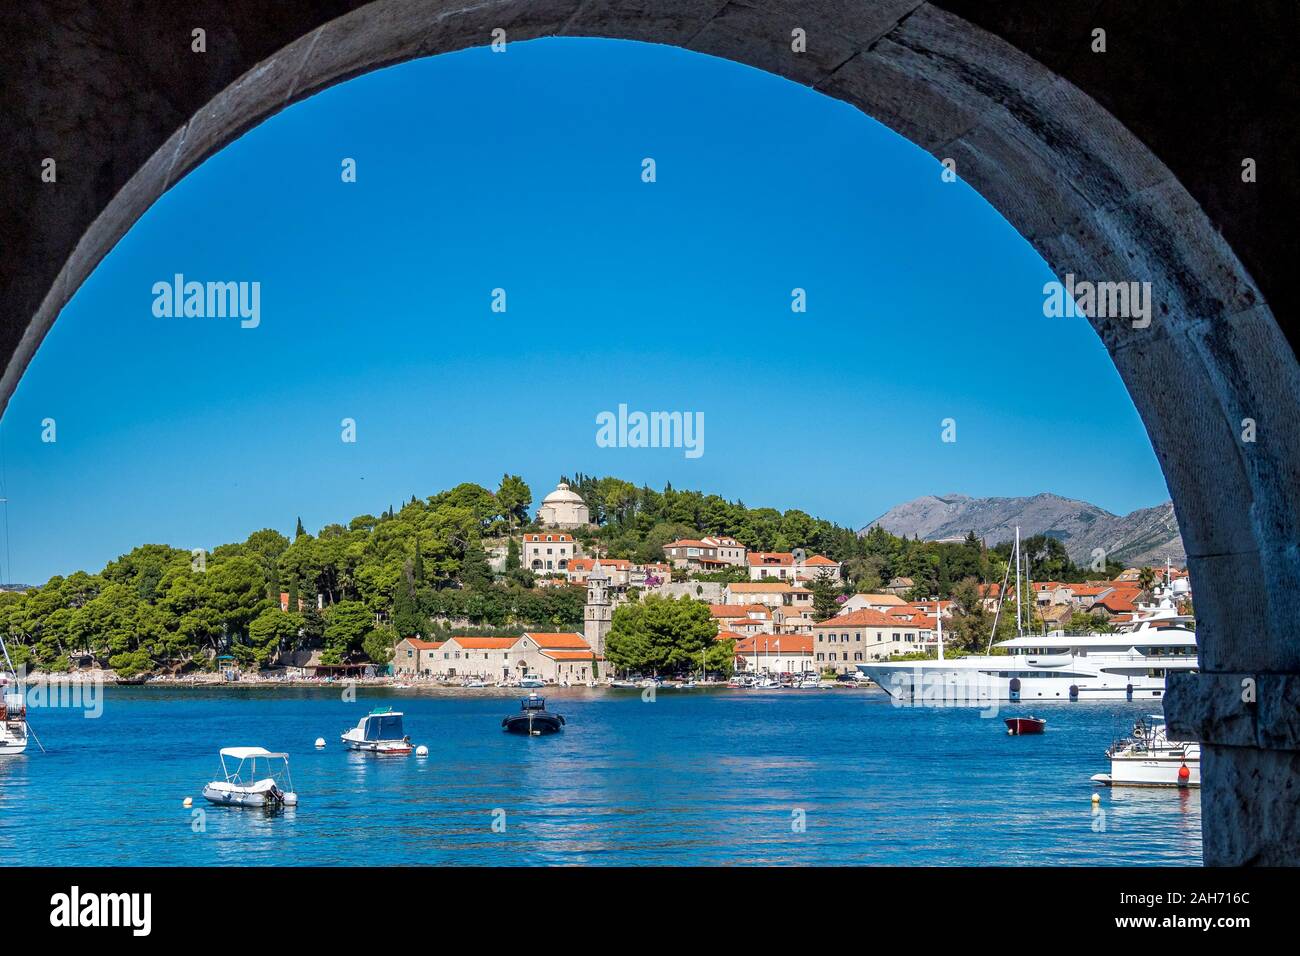 View of the village Cavtat Cavtat, Croatia September, 20, 2019 Stock Photo